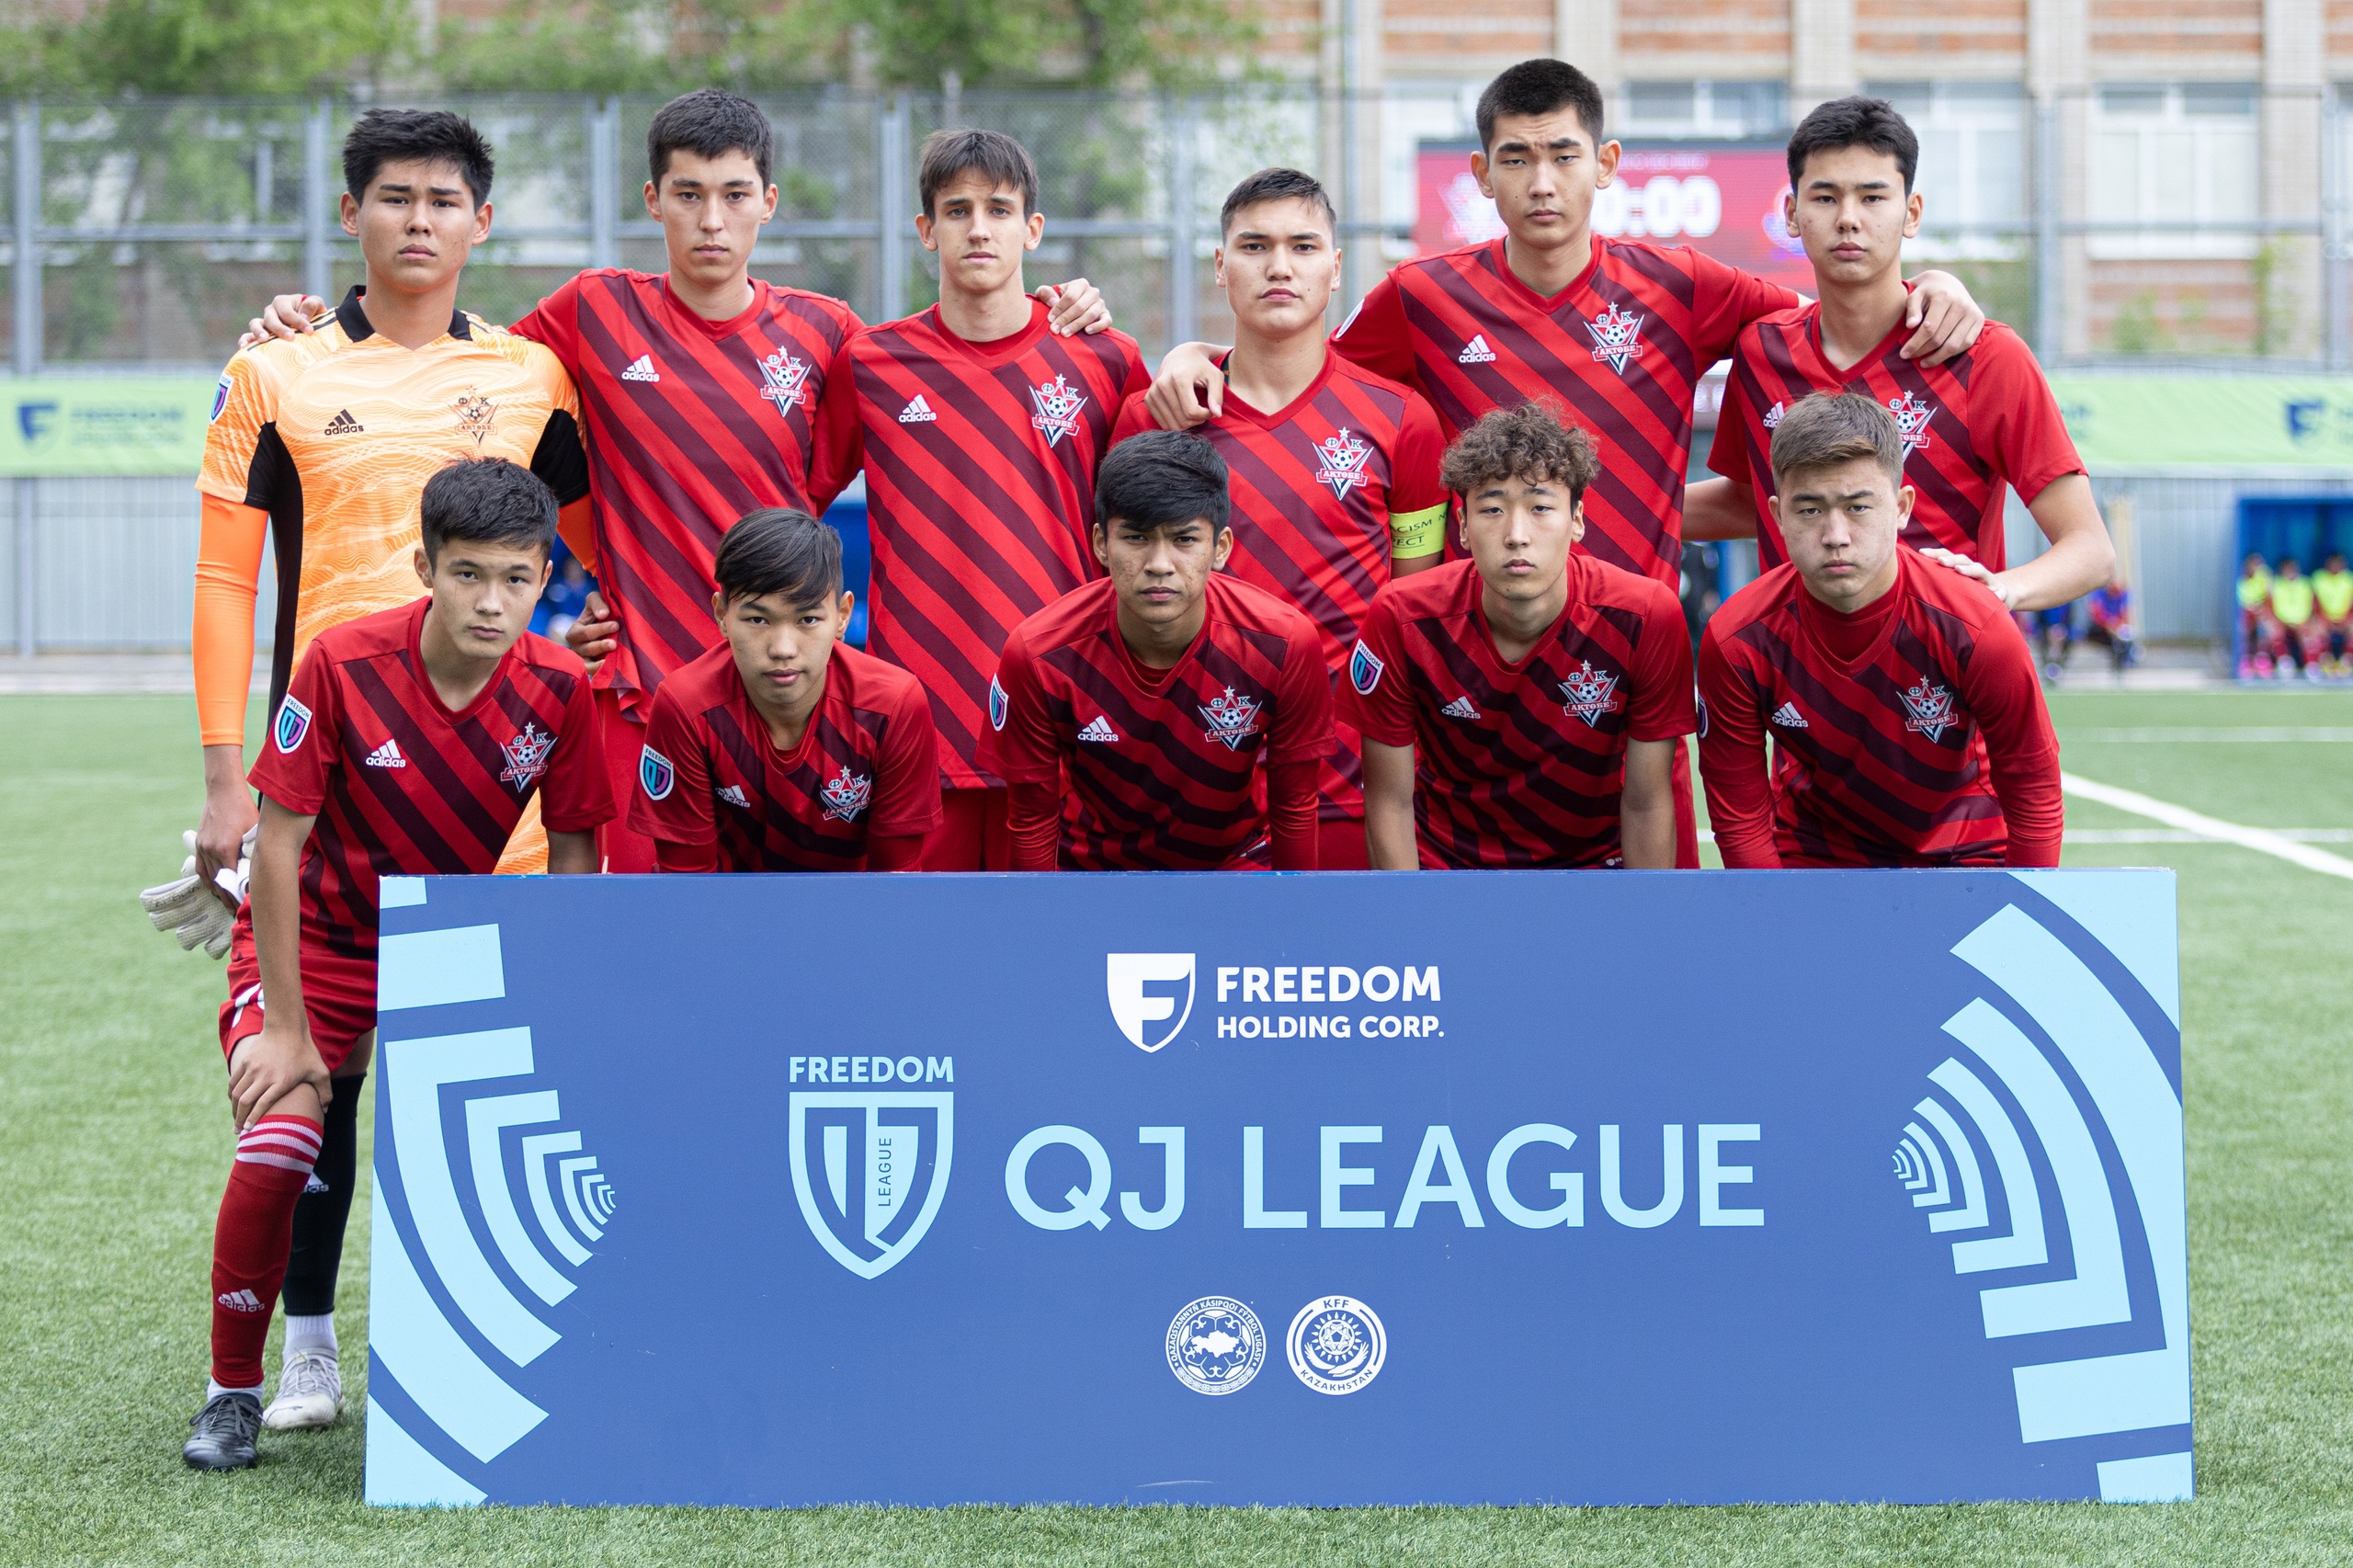 This Saturday QJ League returns after a break